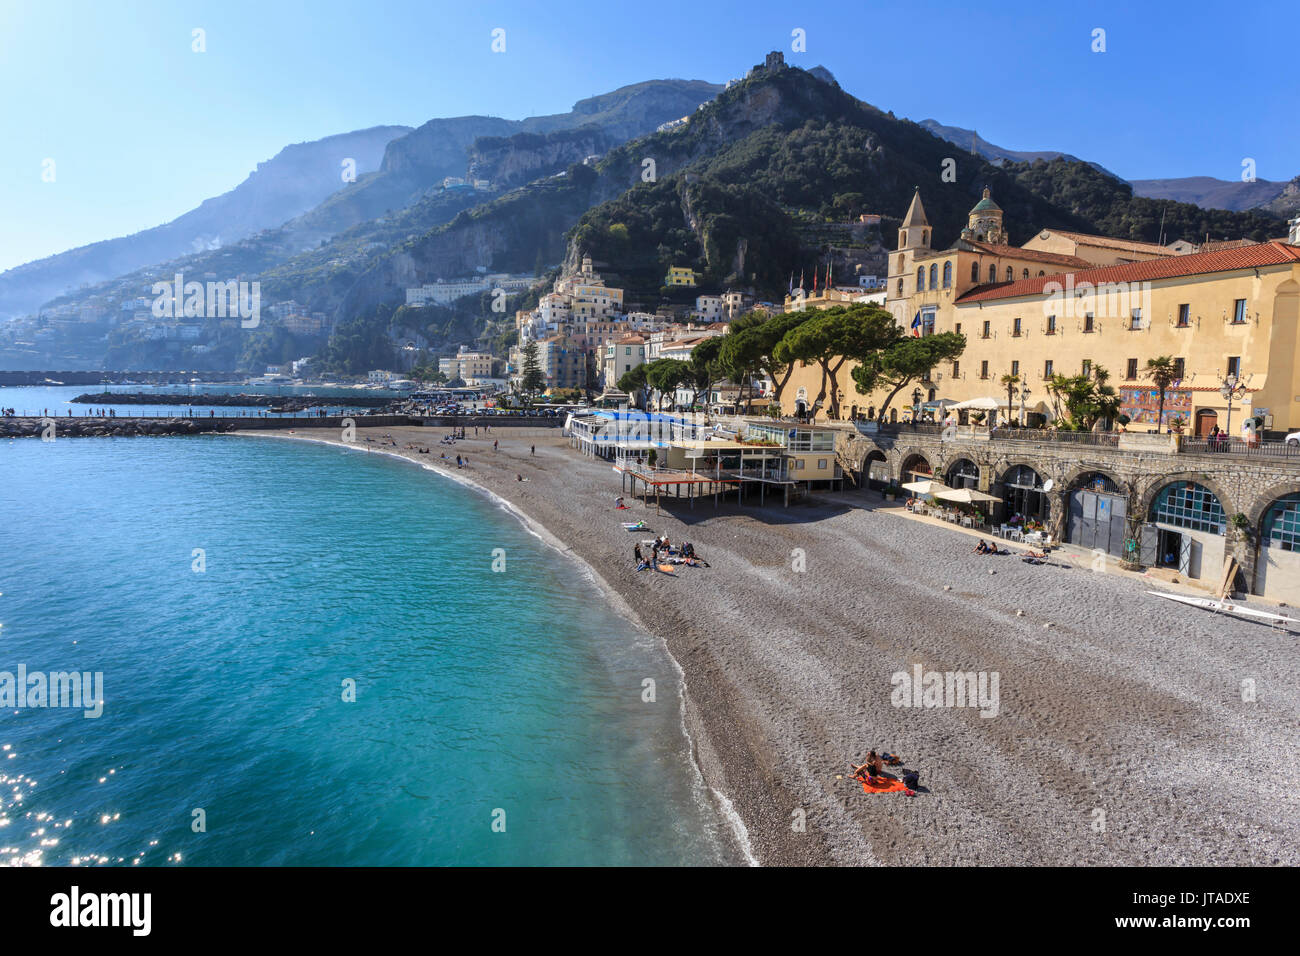 People on beach in spring sun, Amalfi, Costiera Amalfitana (Amalfi Coast), UNESCO World Heritage Site, Campania, Italy, Europe Stock Photo